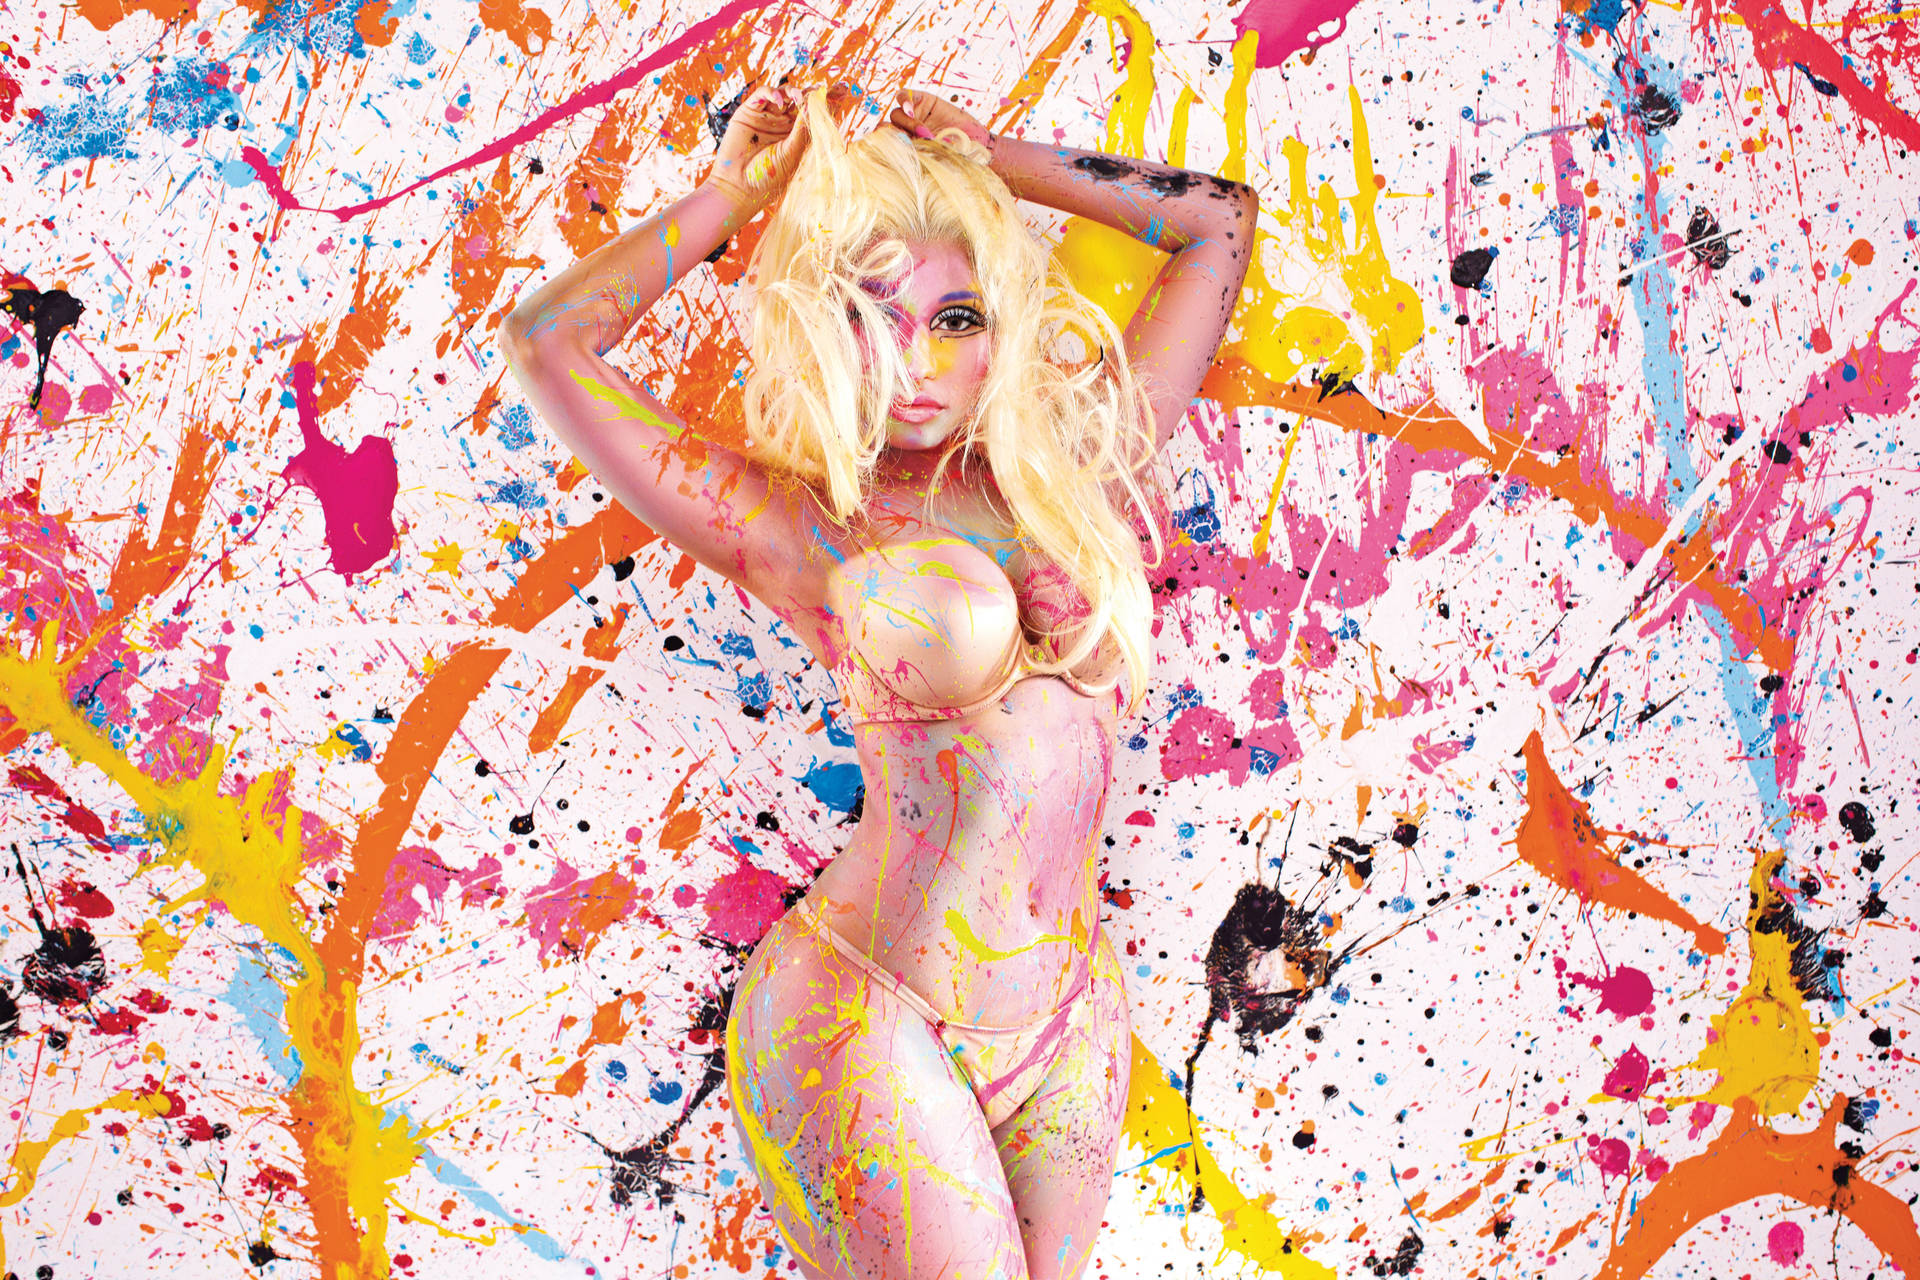 Nicki Minaj Hd 3543 X 2362 Wallpaper